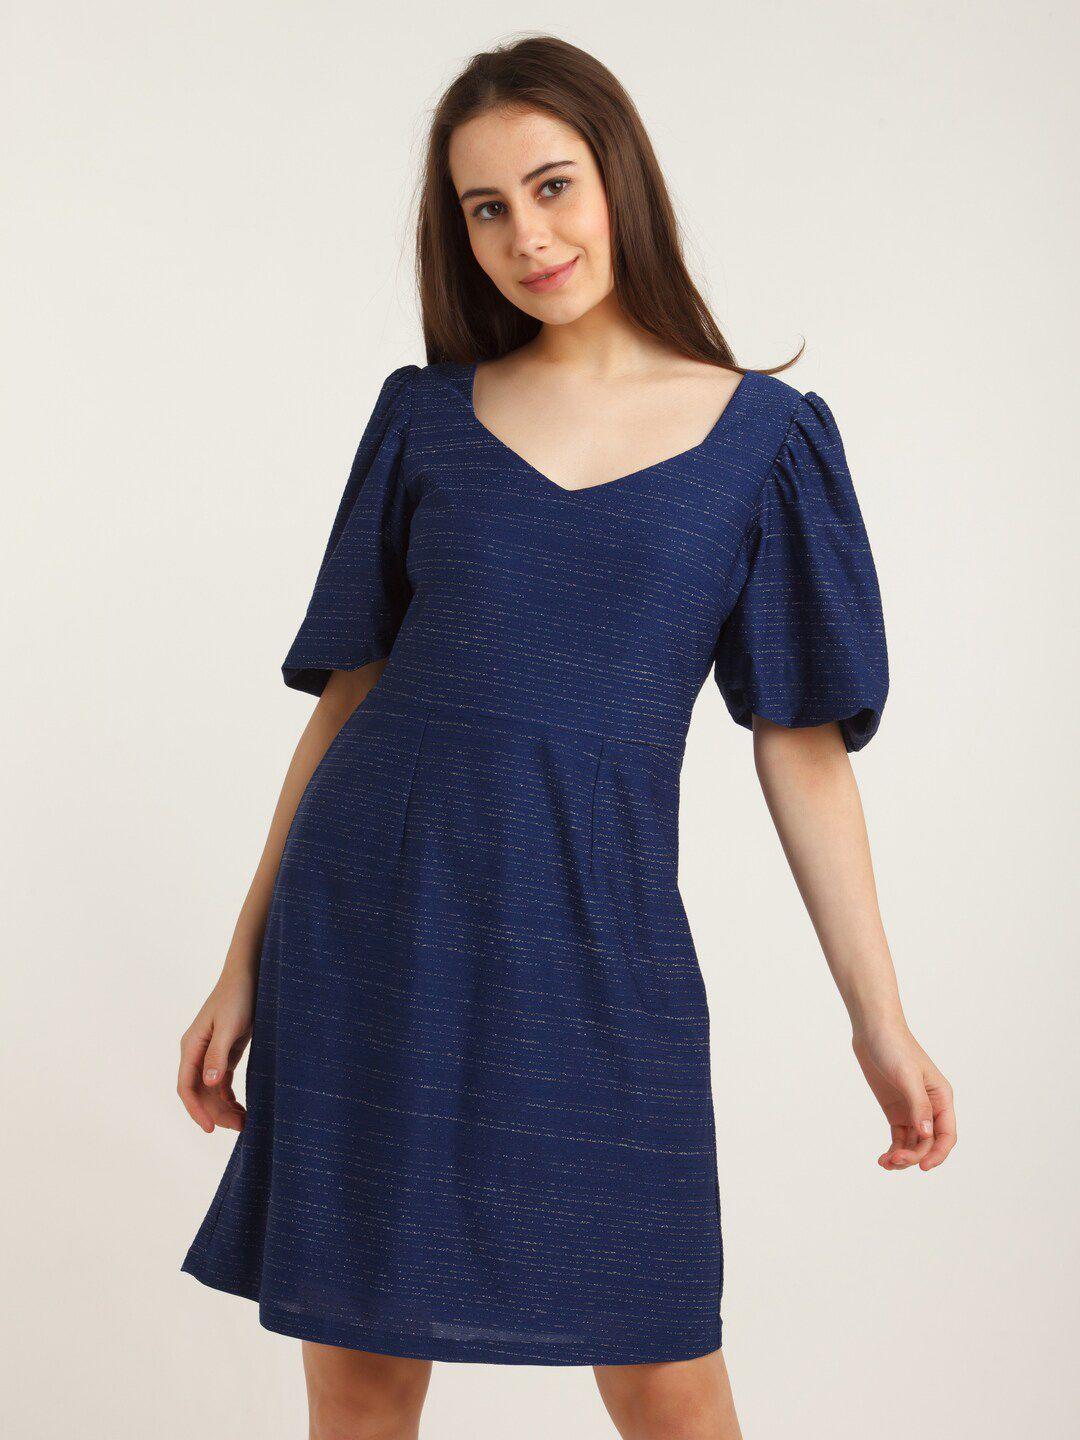 zink london blue embellished puff sleeve a-line dress